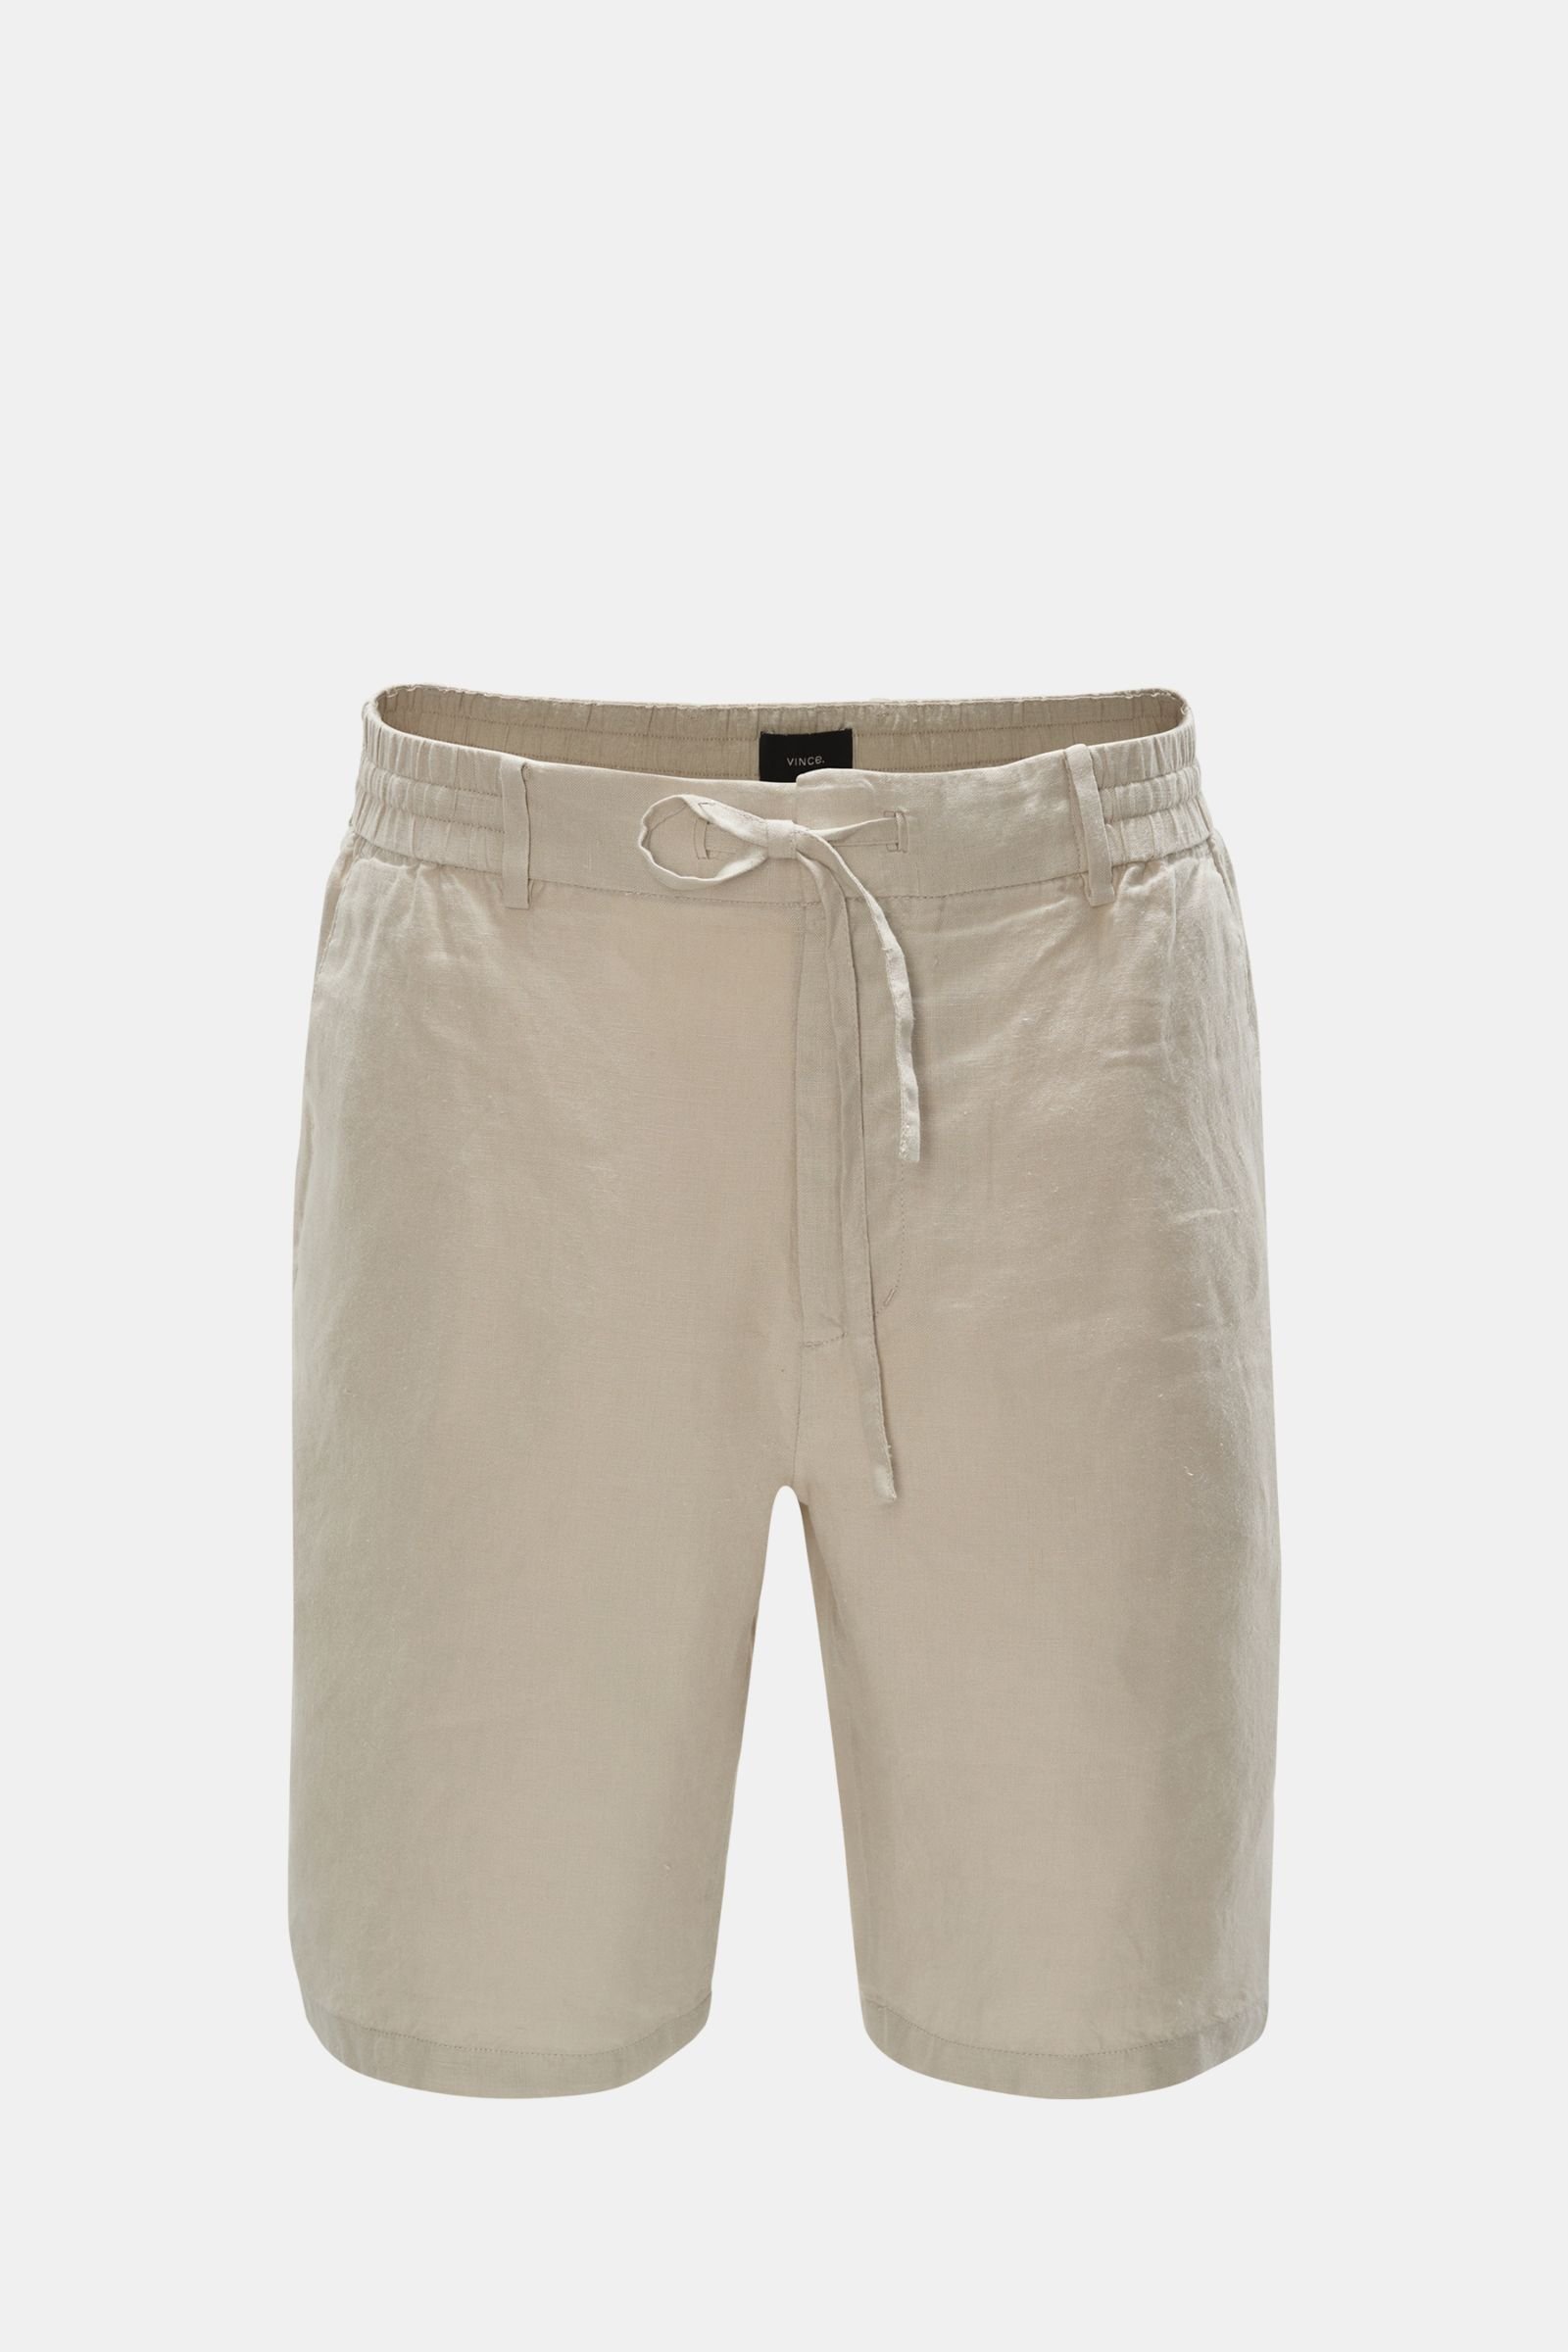 Bermuda shorts beige